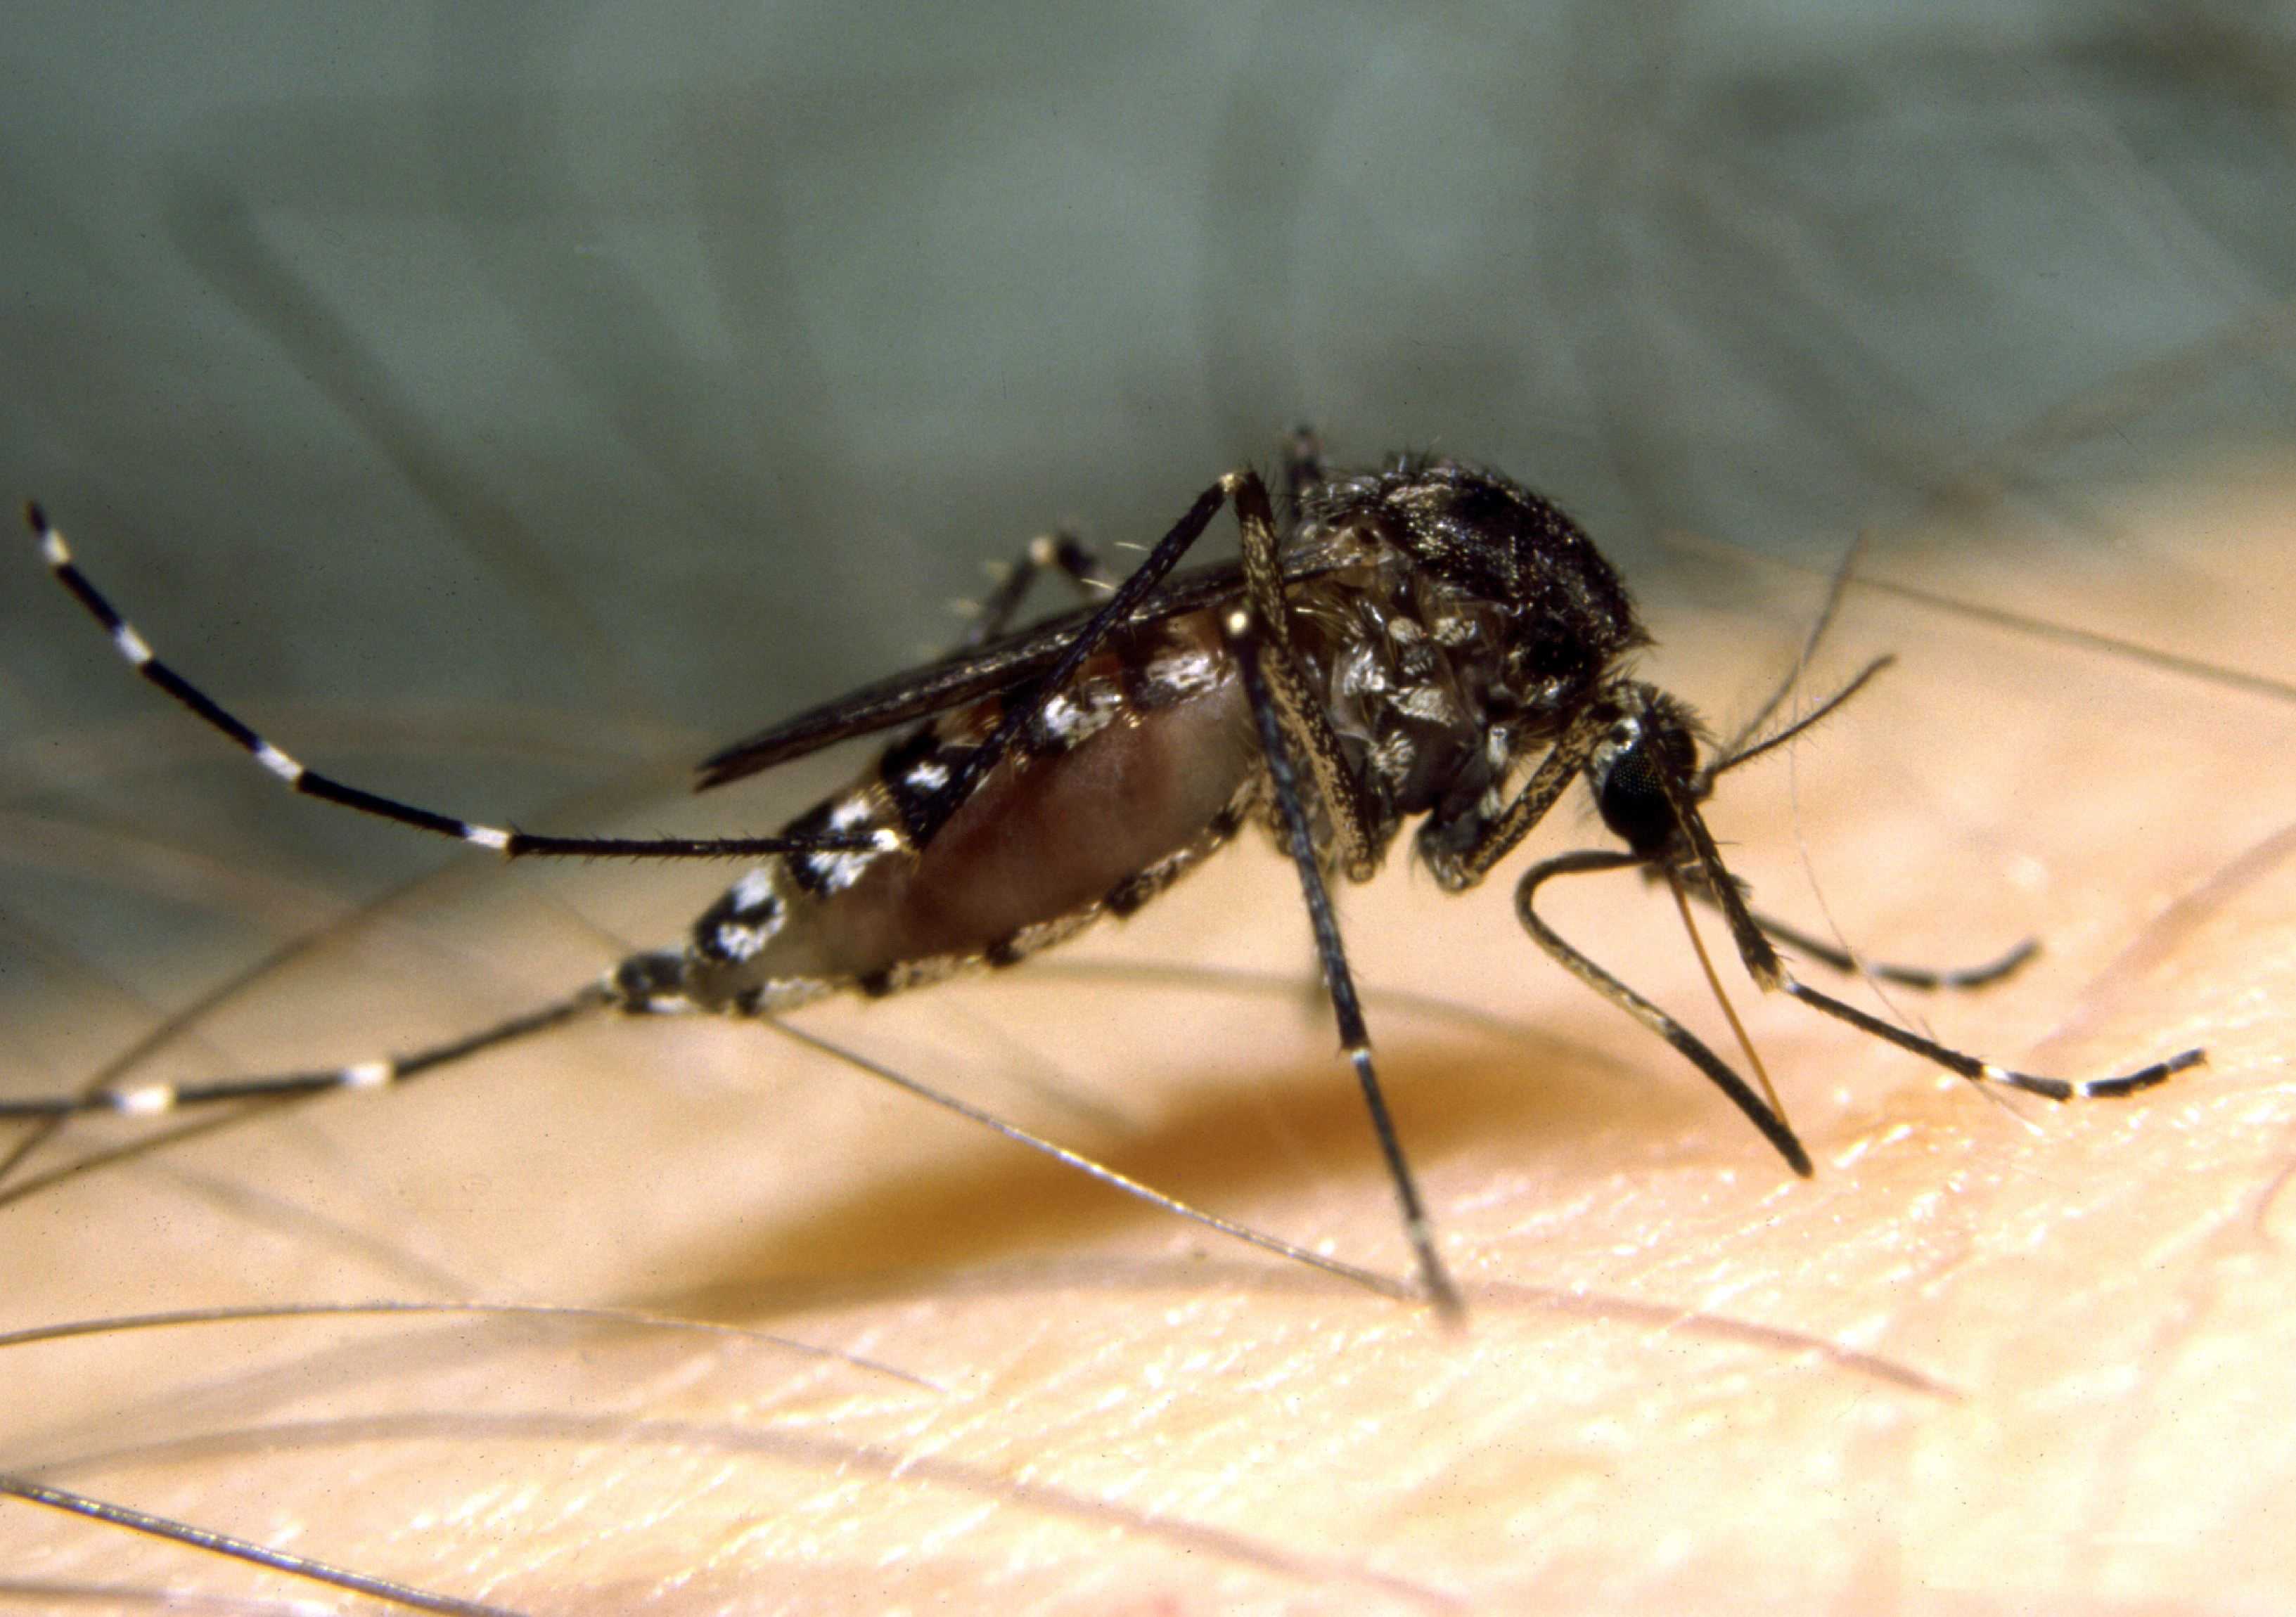 The Saltmarsh Mosquito (Aedes vigilax) (Photo: Stephen Doggett)